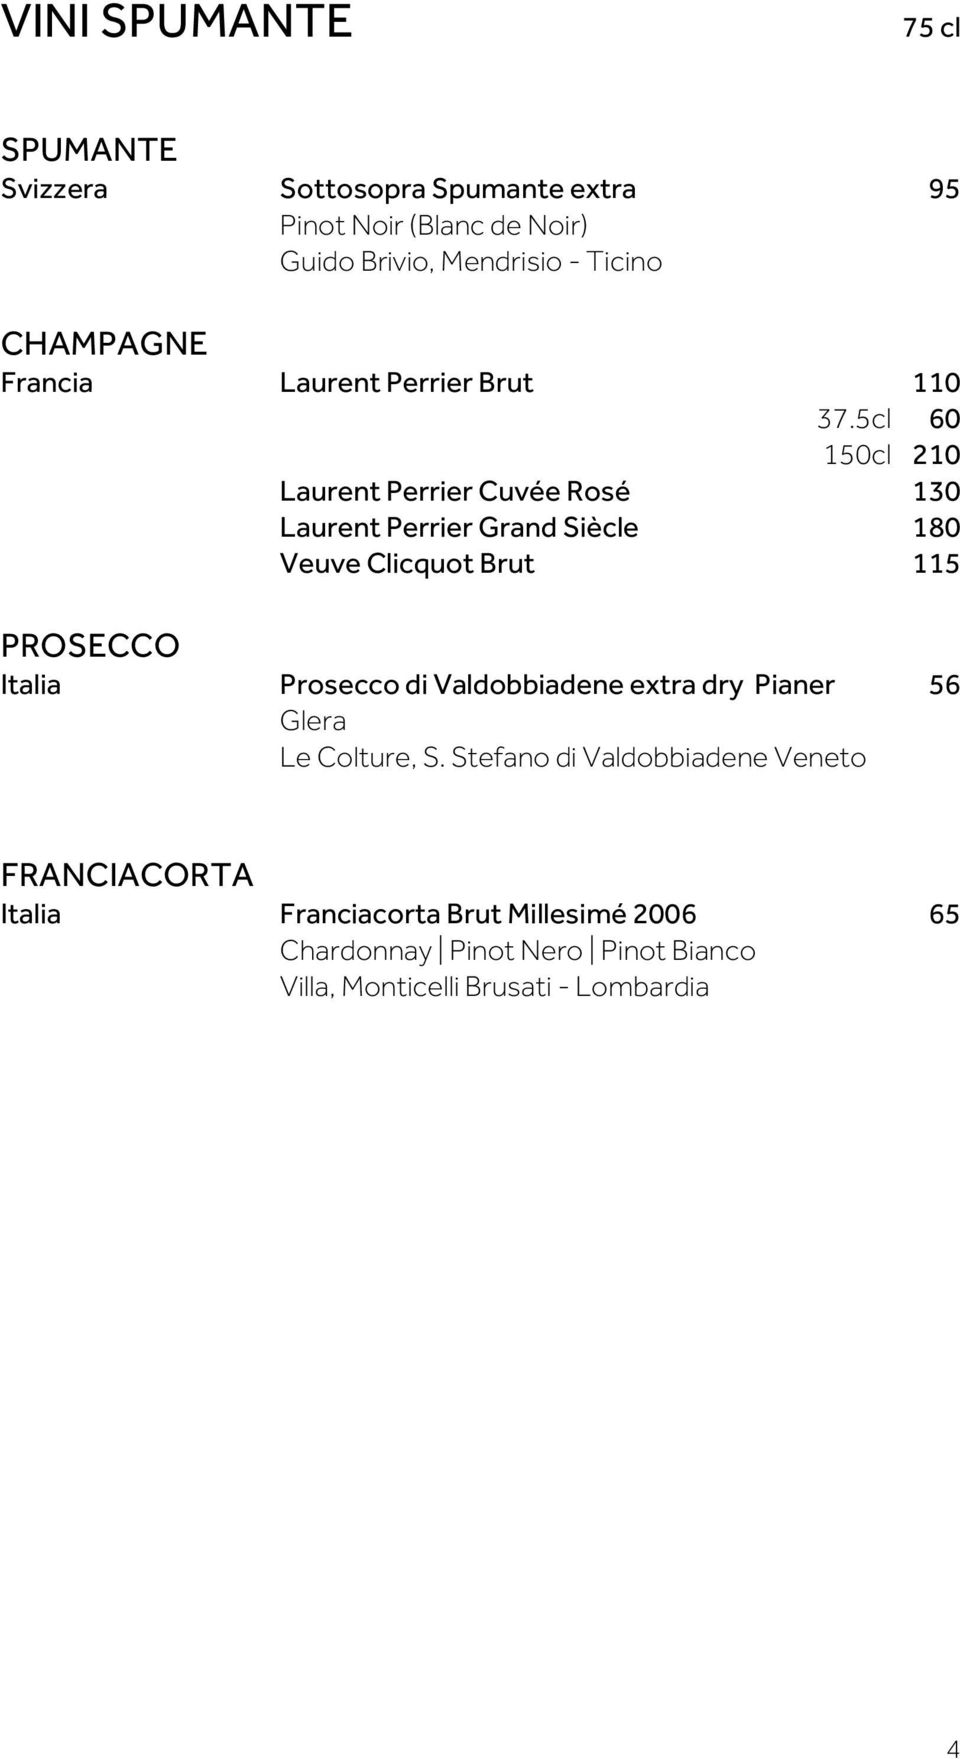 5cl 60 150cl 210 Laurent Perrier Cuvée Rosé 130 Laurent Perrier Grand Siècle 180 Veuve Clicquot Brut 115 PROSECCO Italia Prosecco